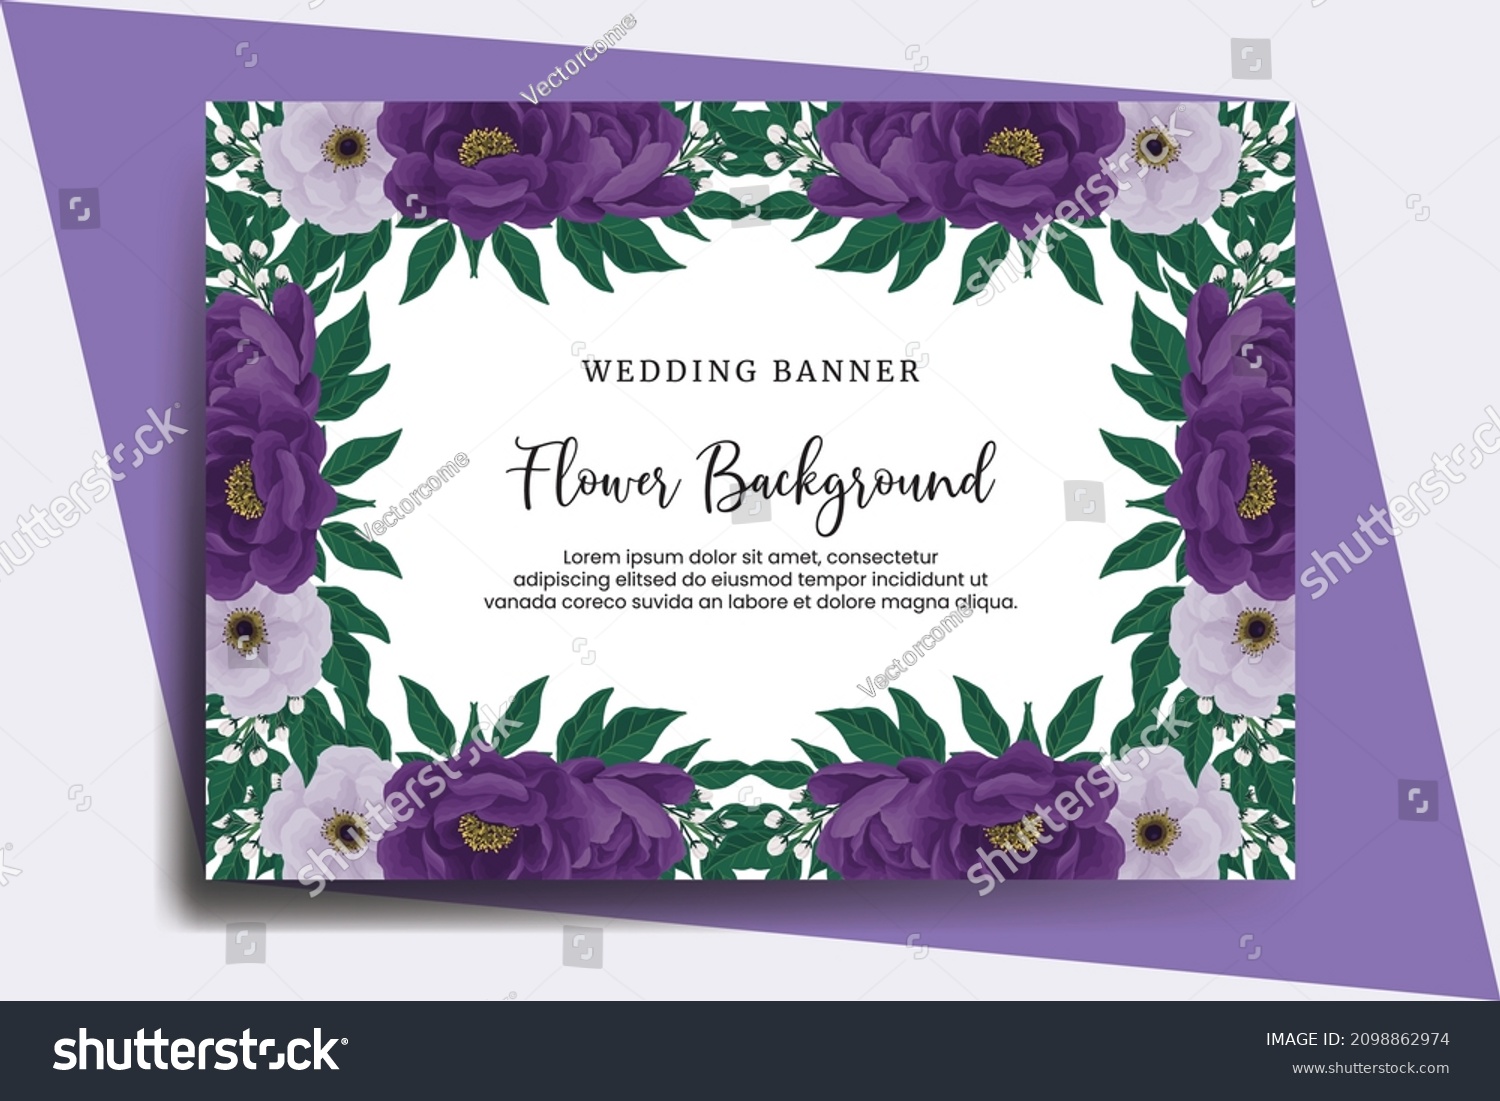 SVG of Wedding banner flower background, Digital watercolor hand drawn Purple Peony Flower design Template svg